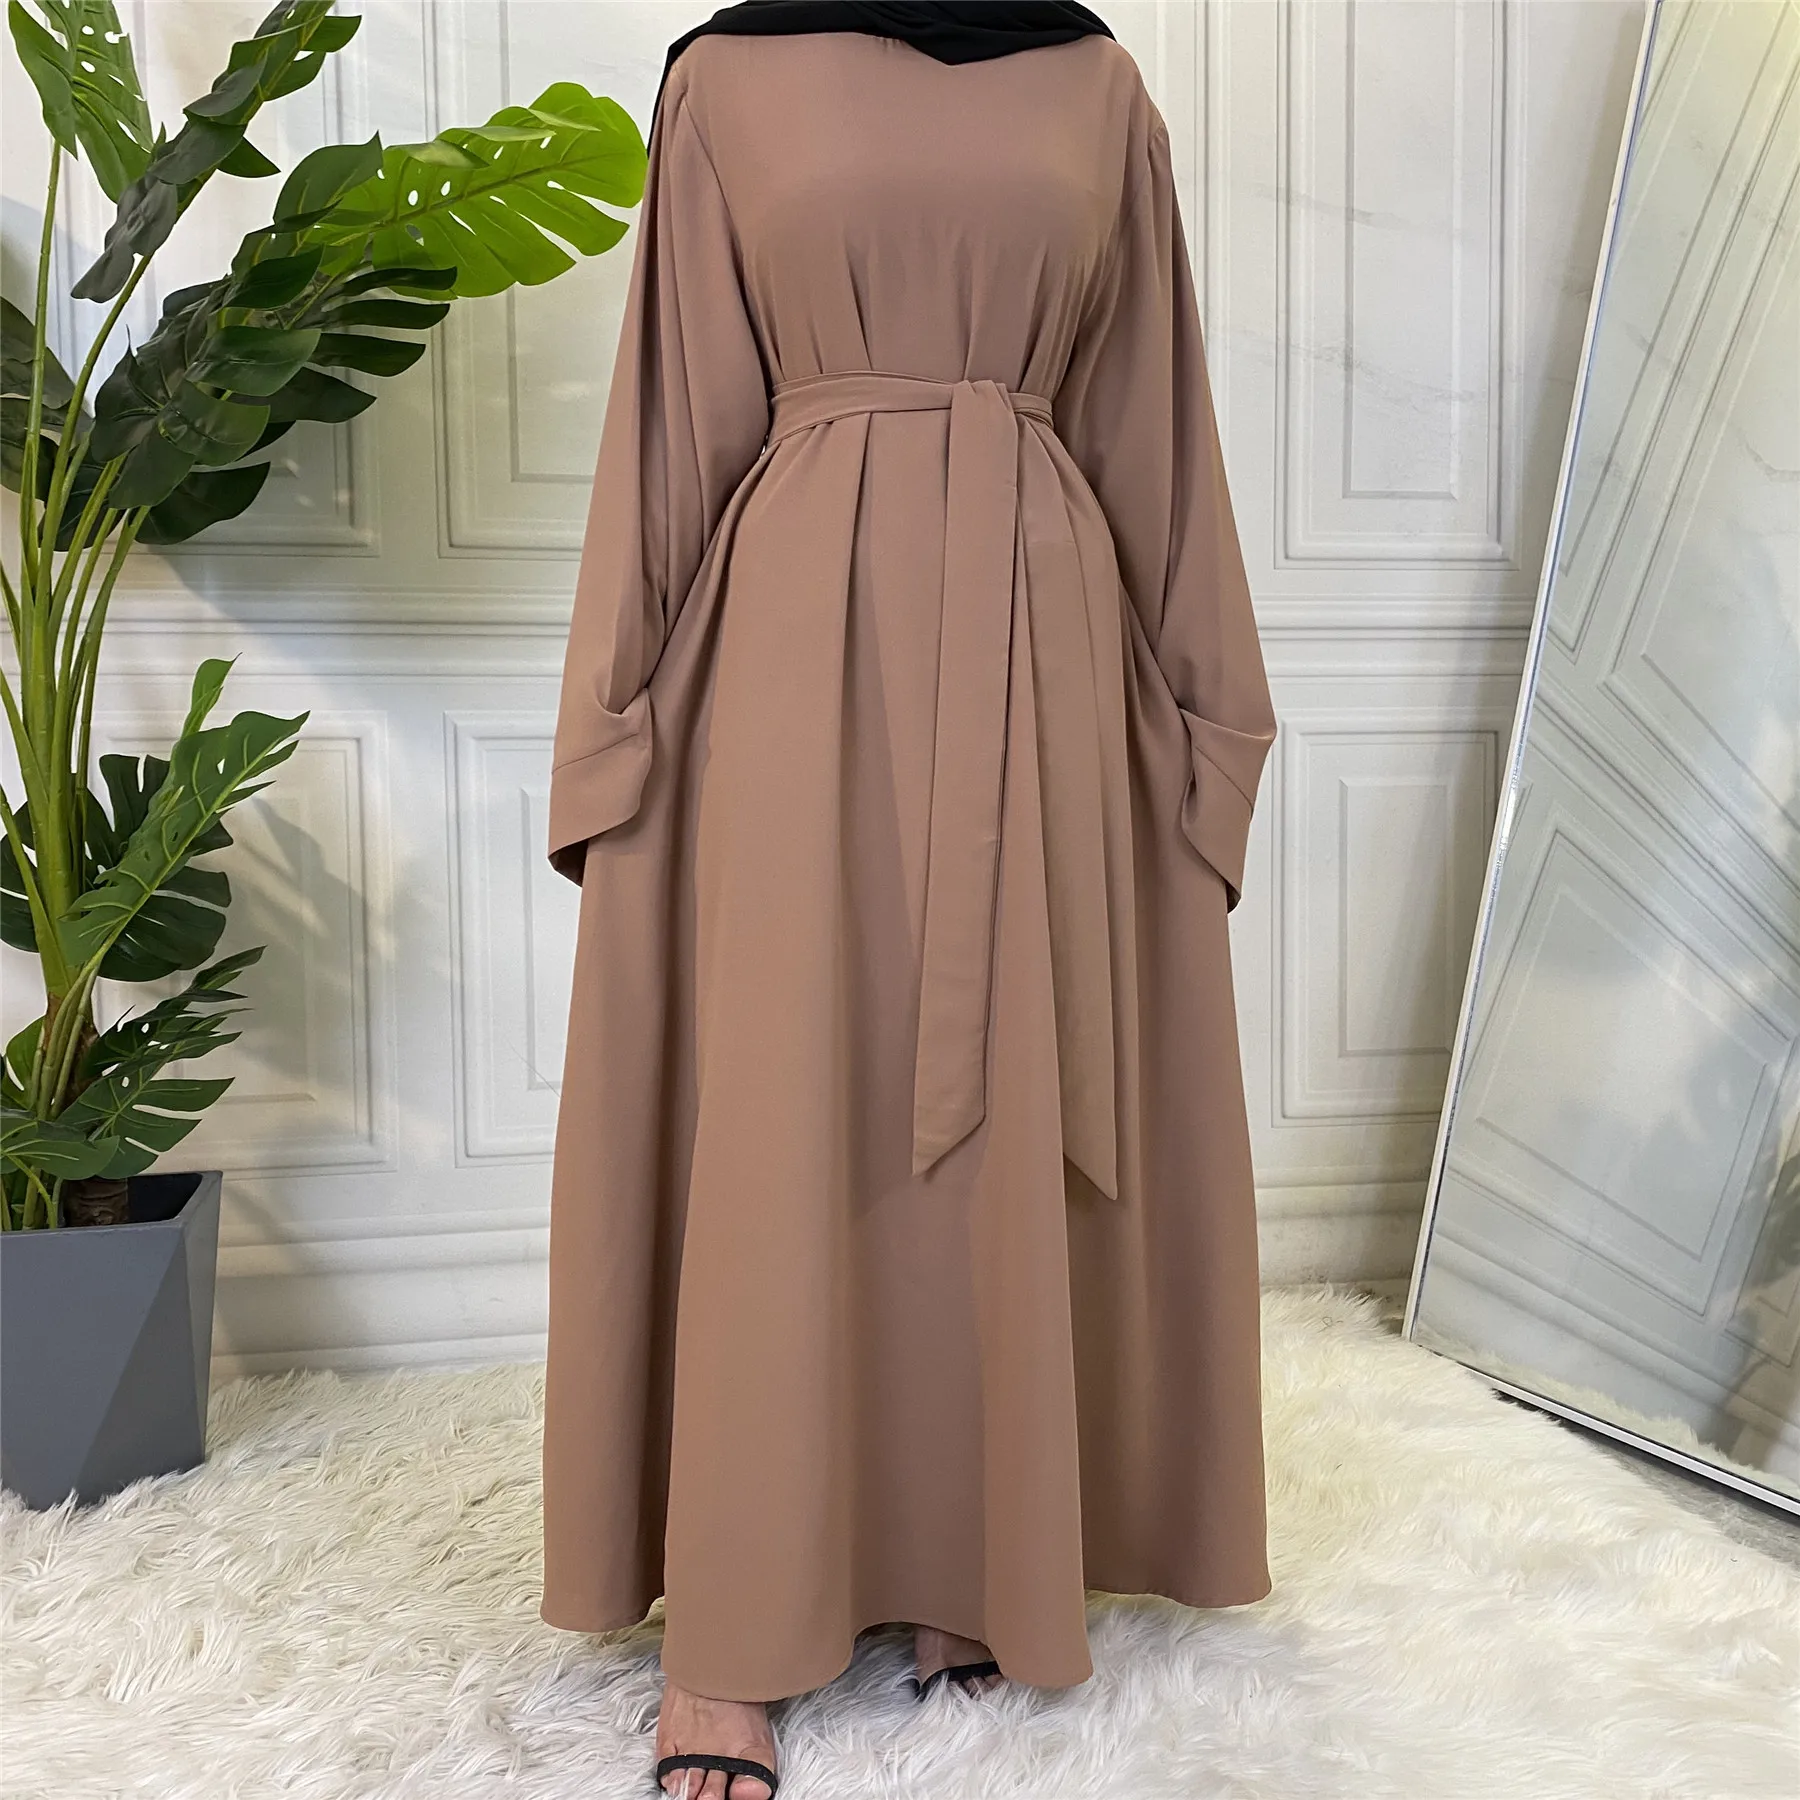 Beige Color Turkish Muslim Abaya Design Dress WITH Free Gift Necklace | eBay